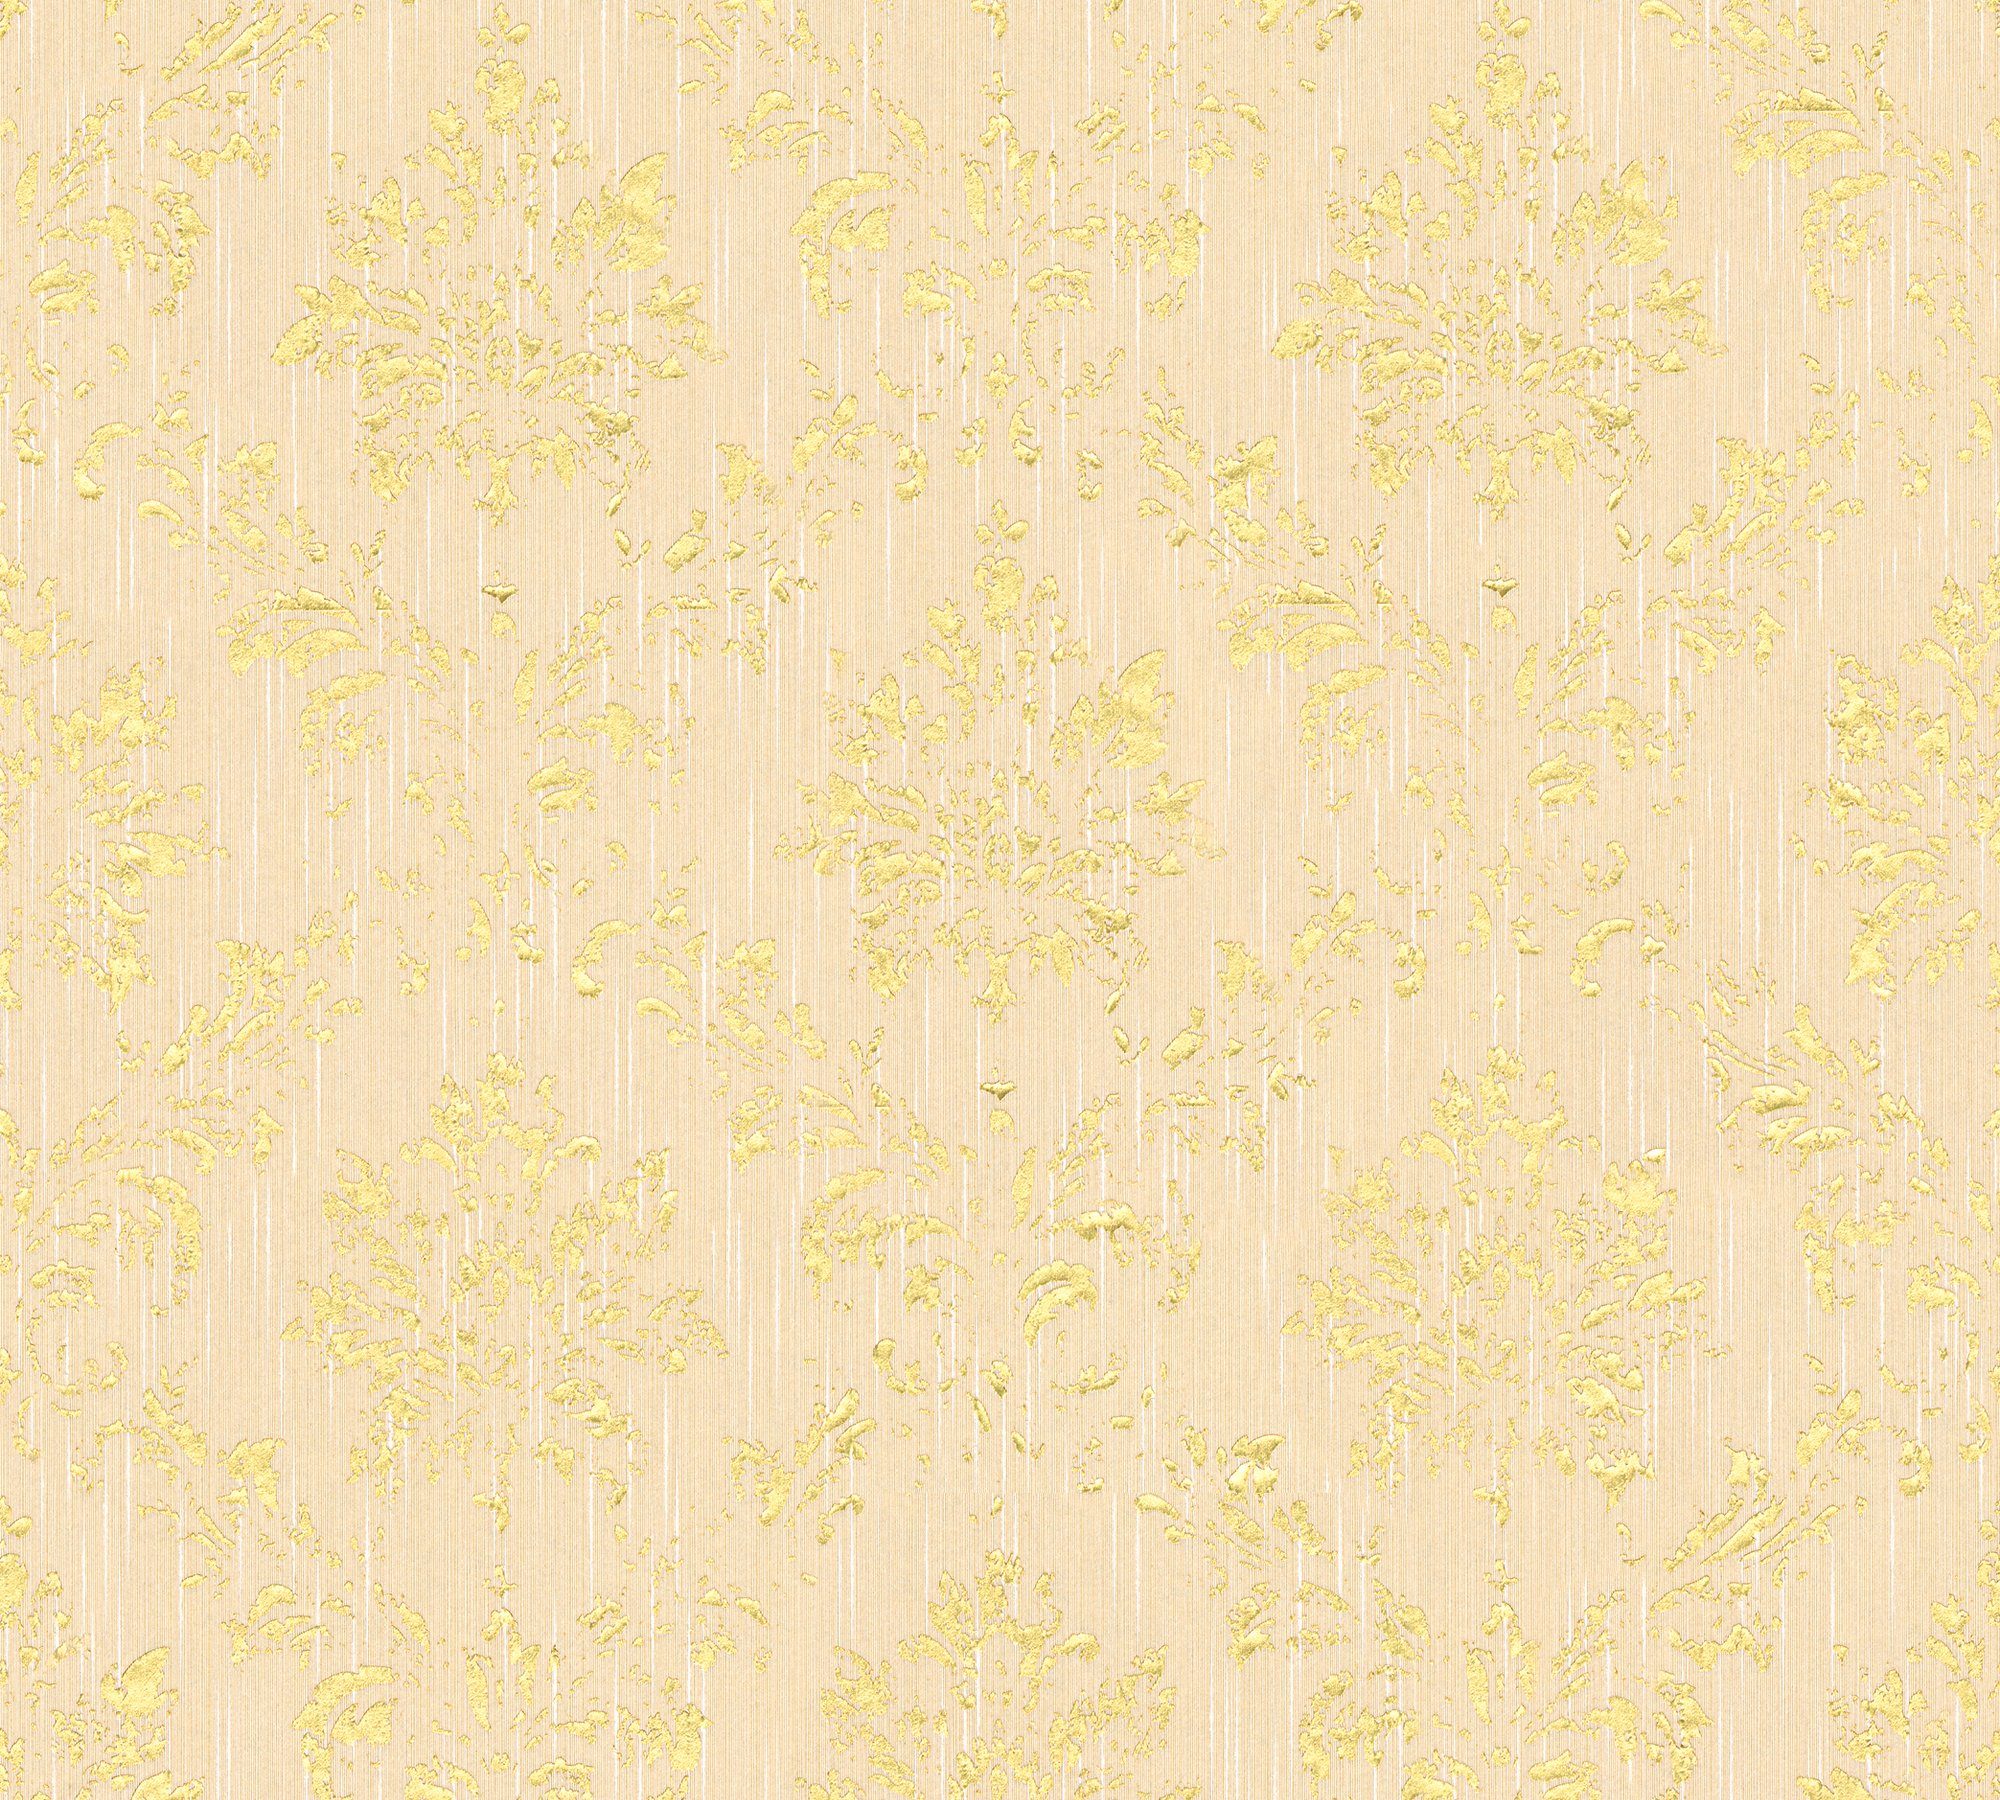 Création Paper Textiltapete samtig, matt, creme/gold Barock Silk, Tapete Architects glänzend, Ornament A.S. Barock, Metallic